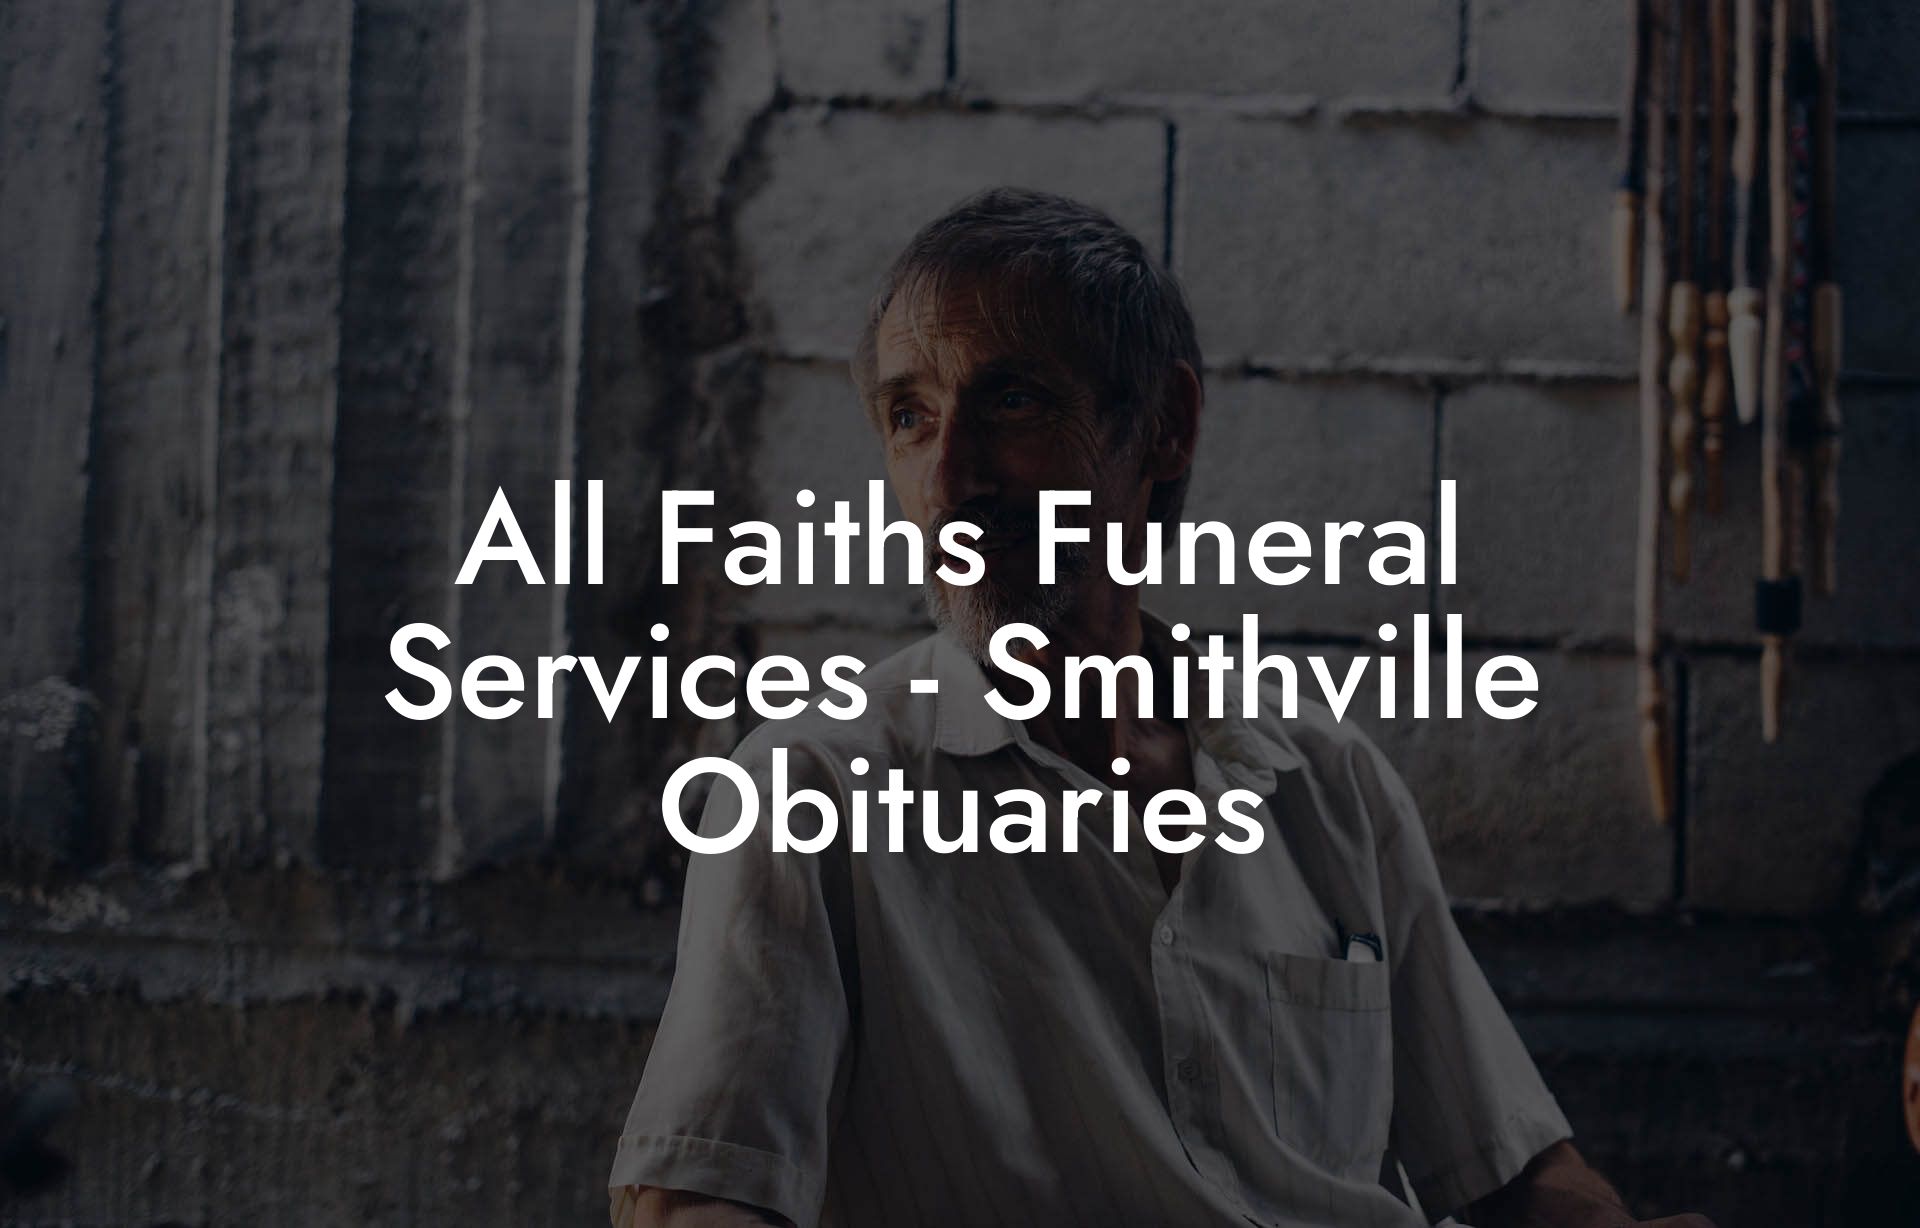 All Faiths Funeral Services - Smithville Obituaries